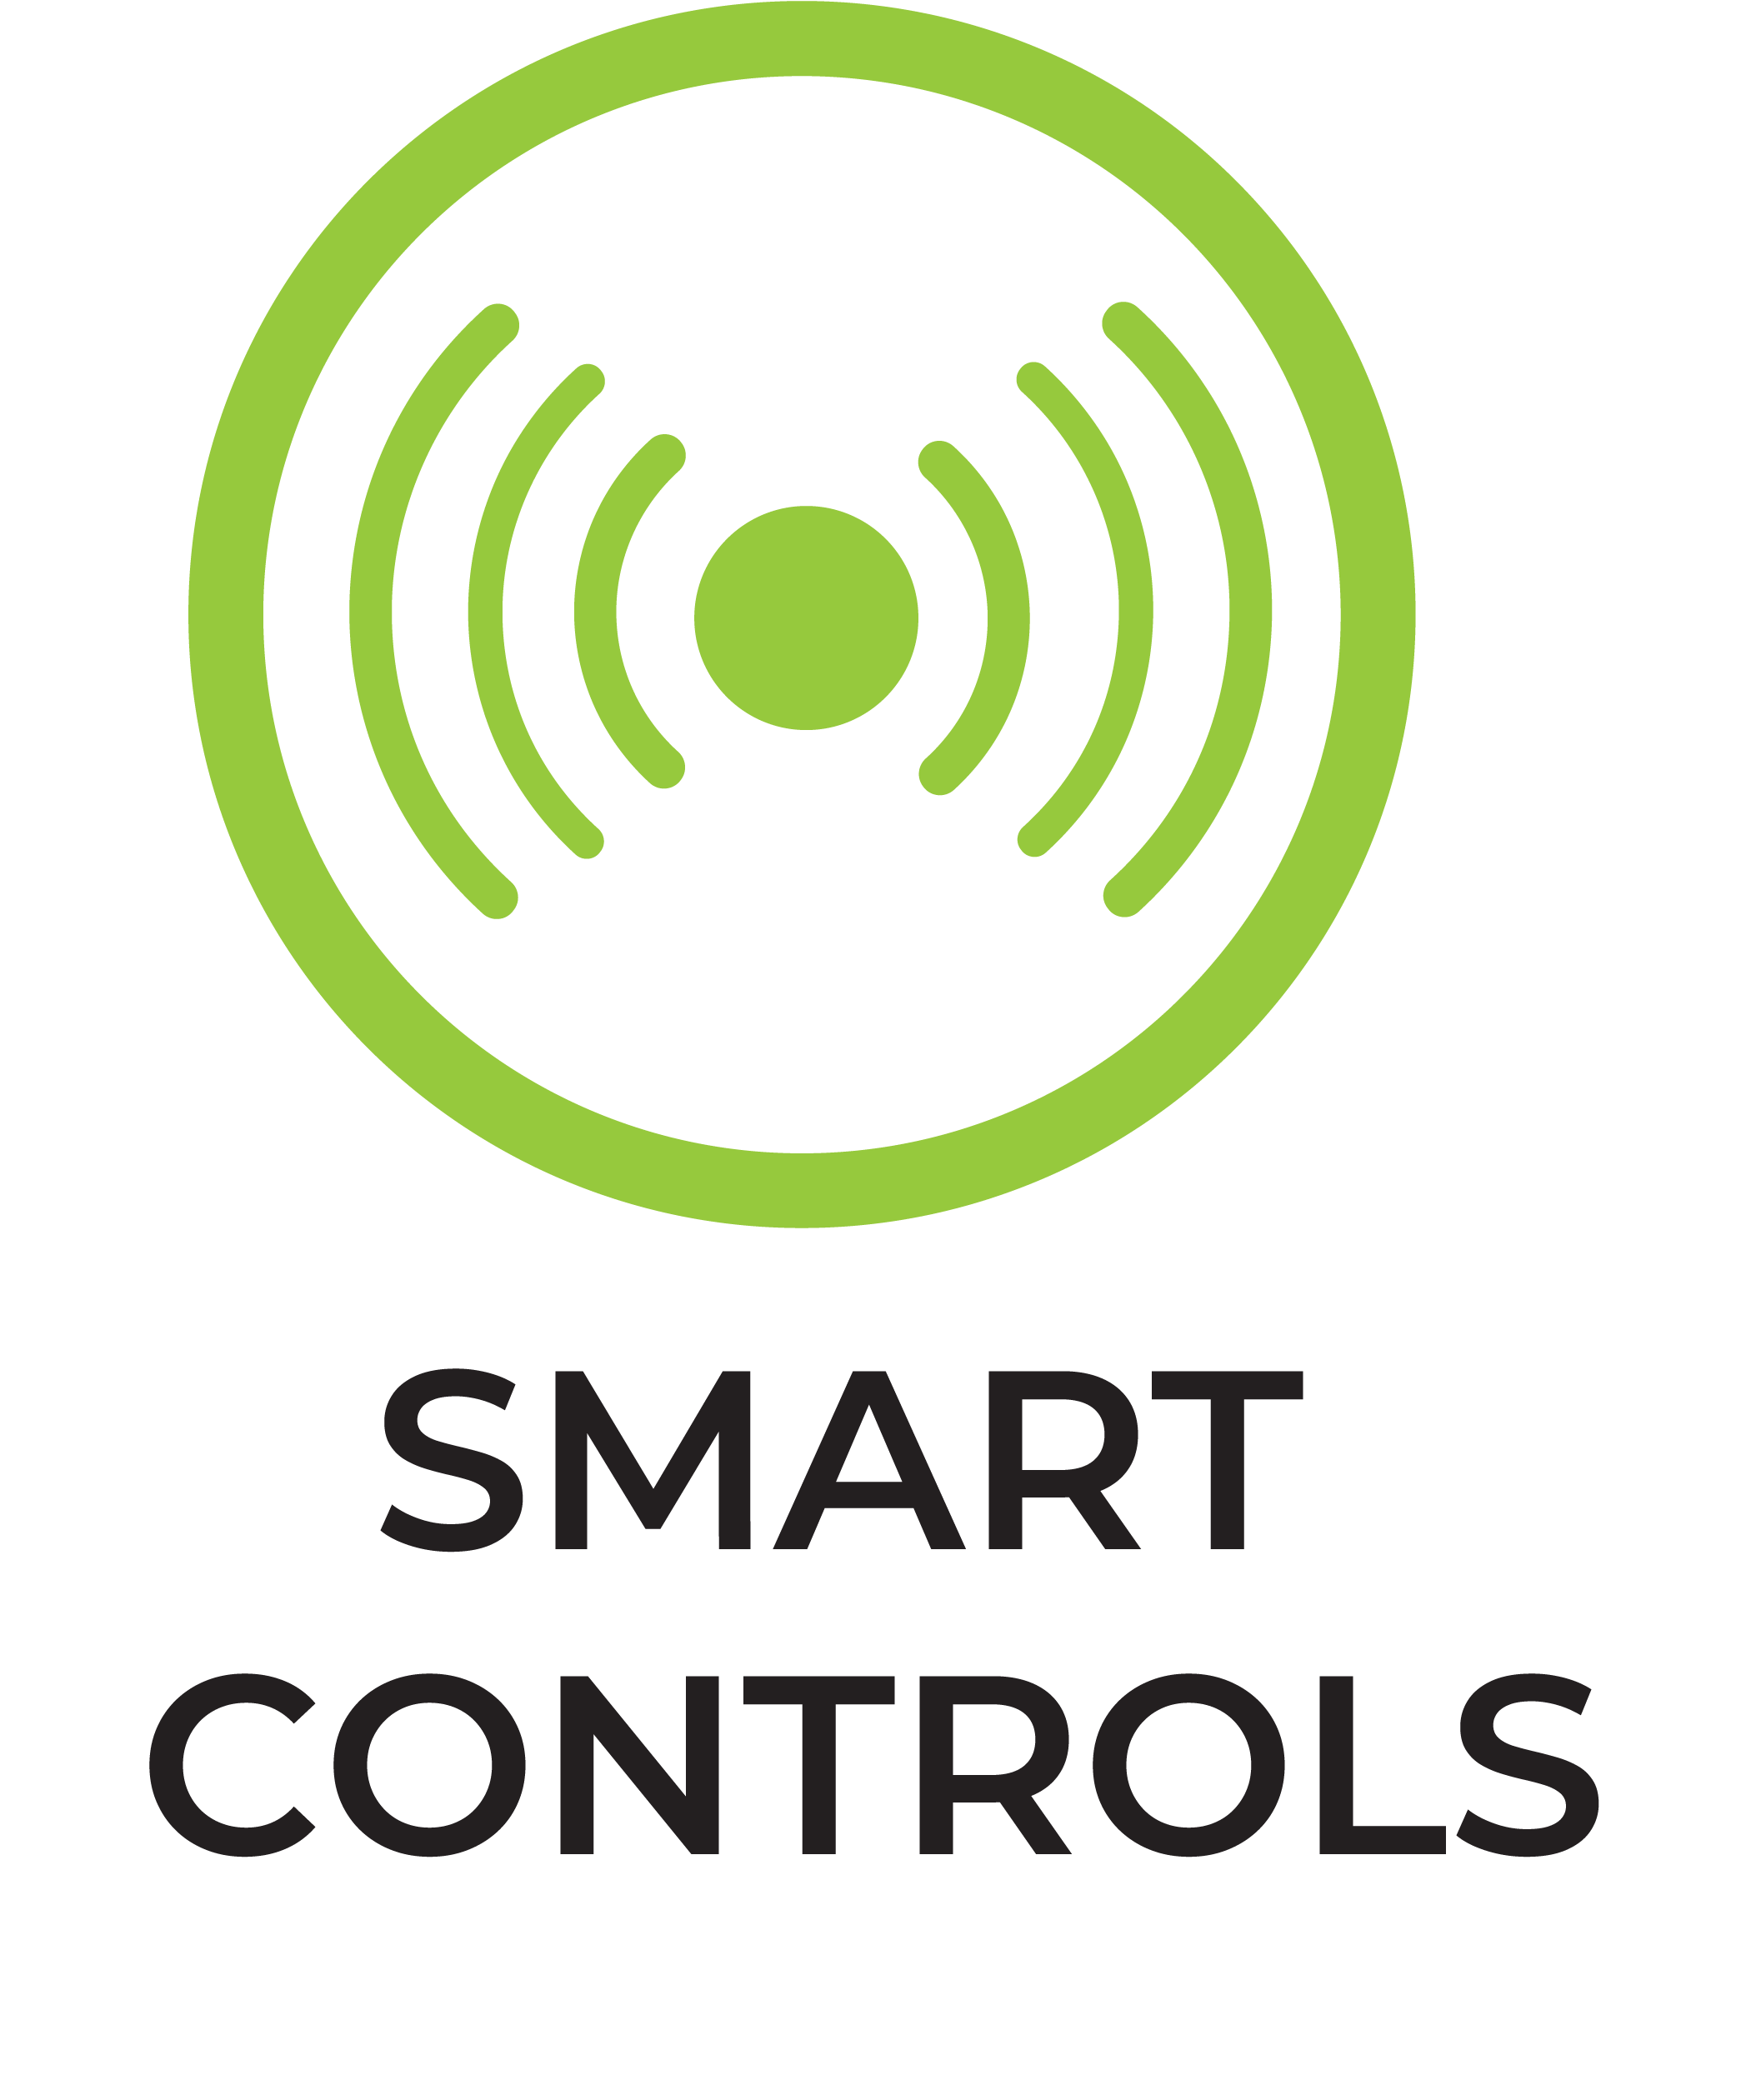 Smart controls